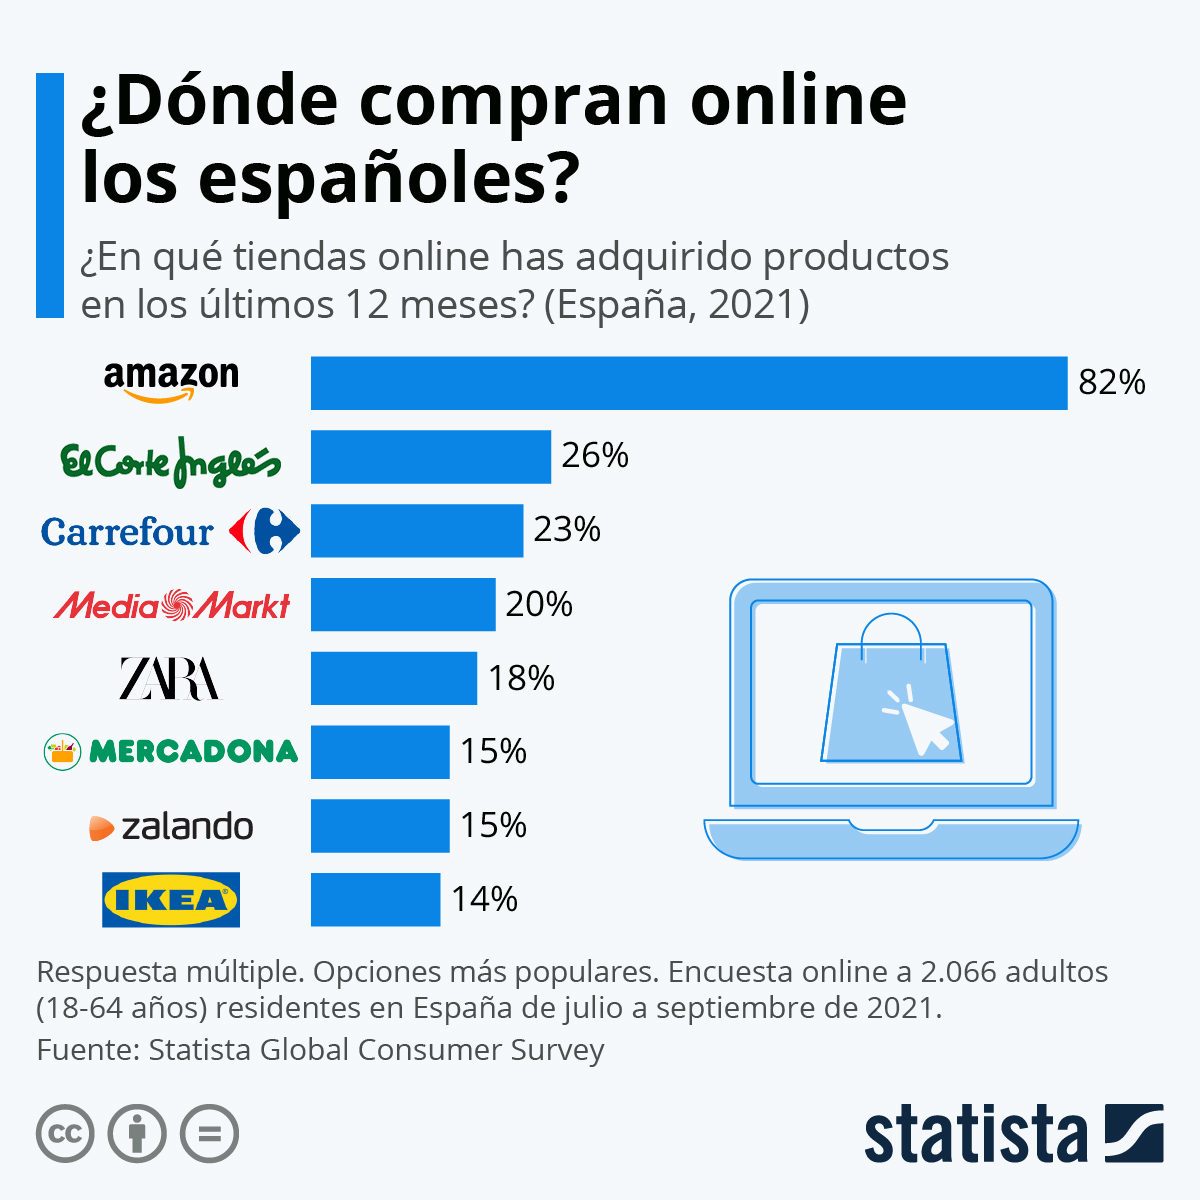 Dónde compran online los españoles #infografia #infographic #ecommerce